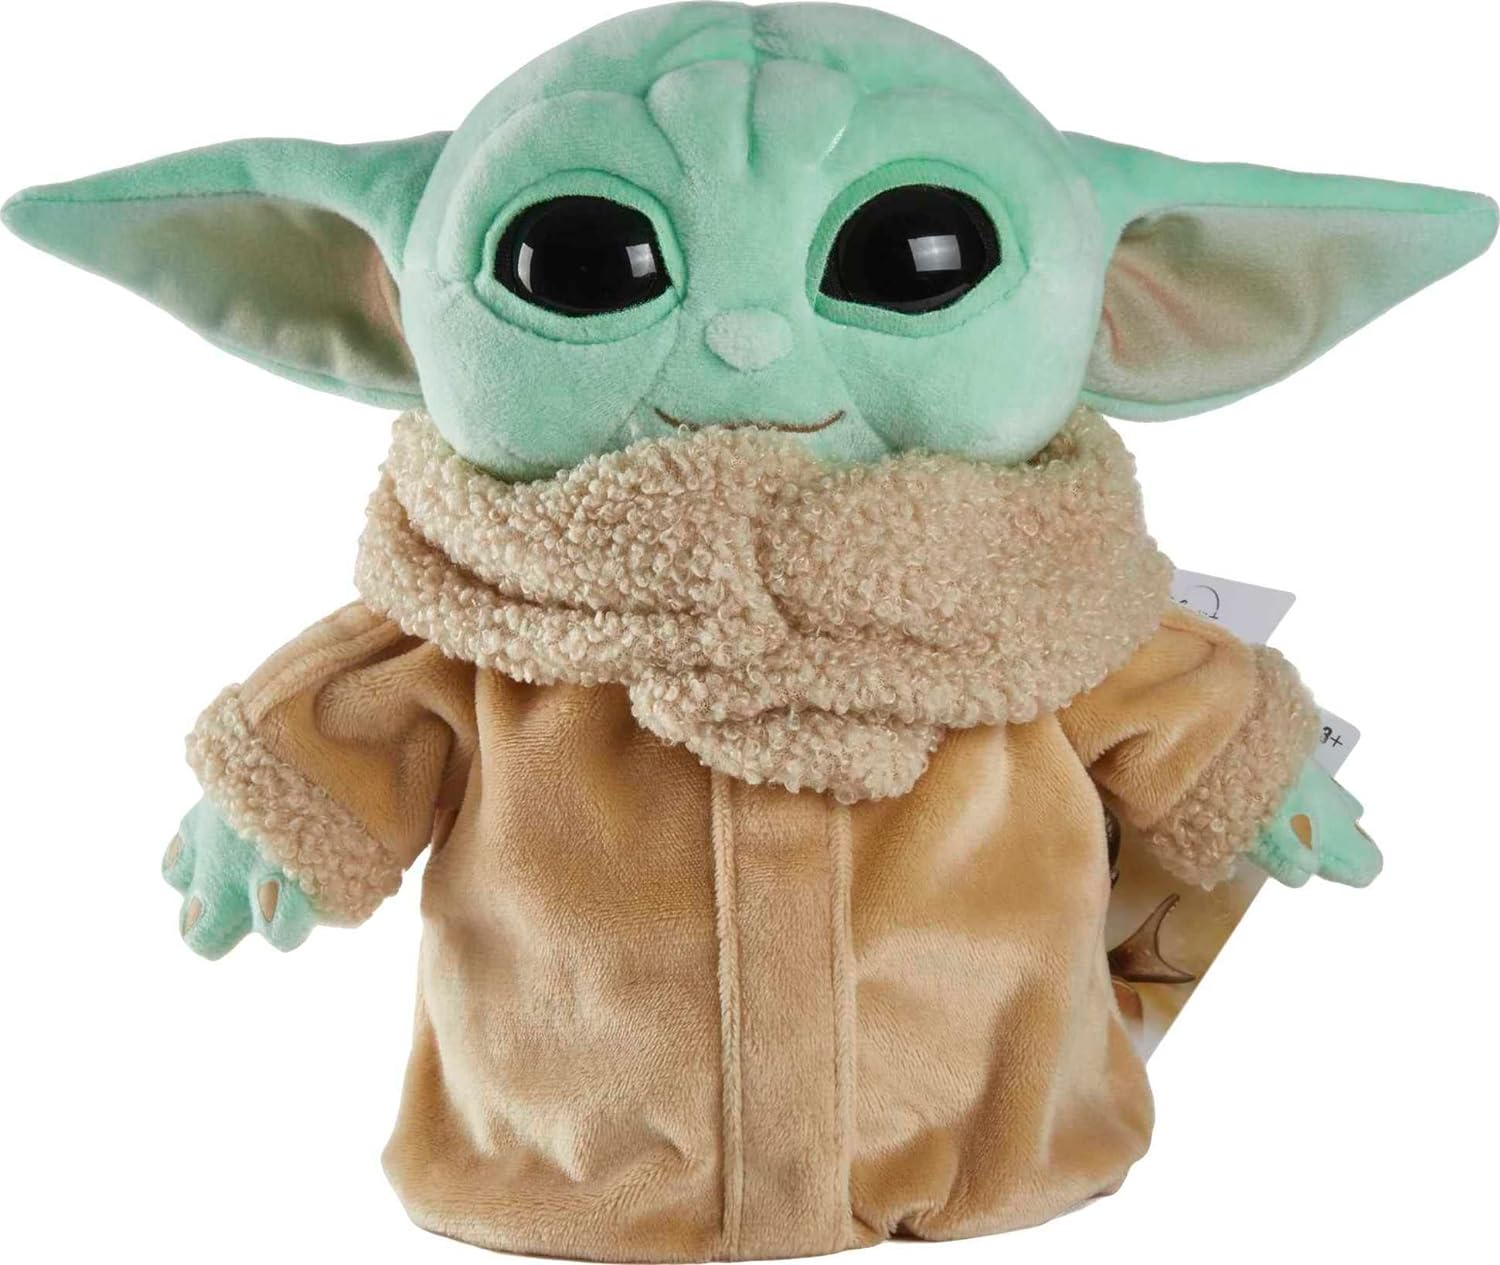 8" Mattel Star Wars The Mandalorian Grogu Plush Stuffed Animal Toy $4.20 + Free Shipping w/ Prime or on $35+